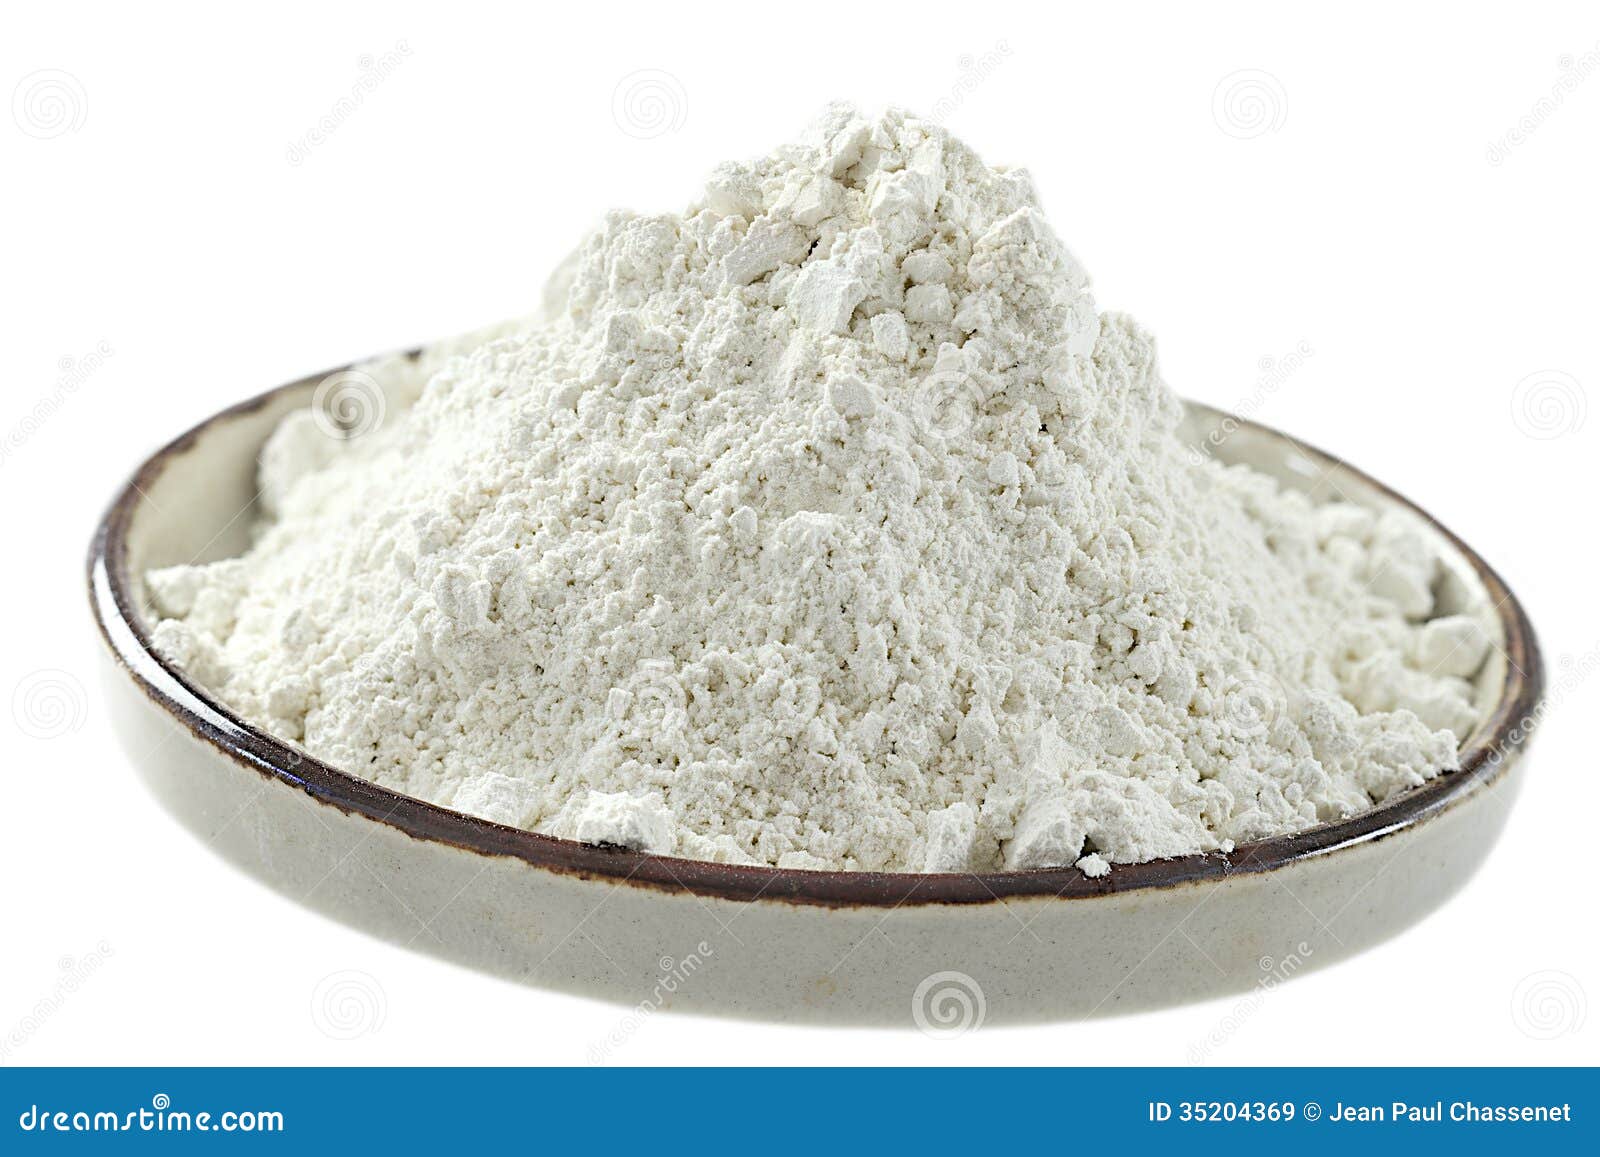 white clay powder